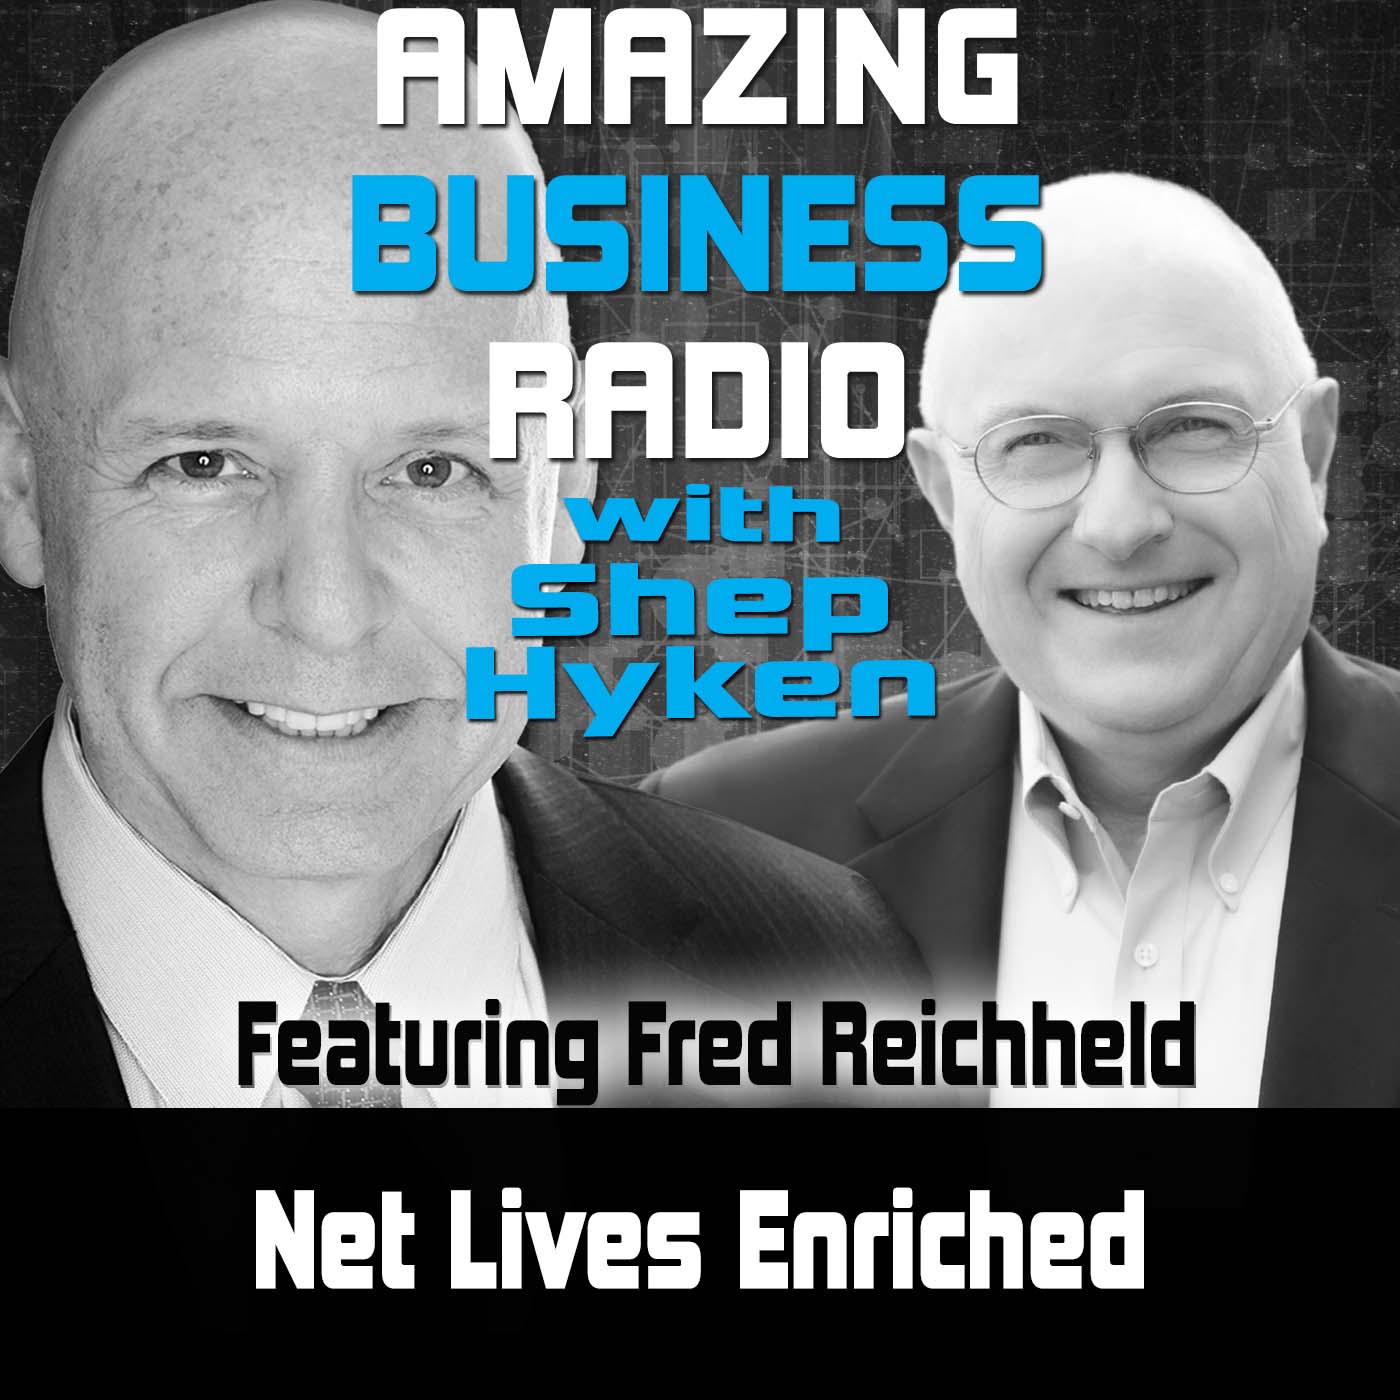 Amazing Business Radio: Fred Reichheld